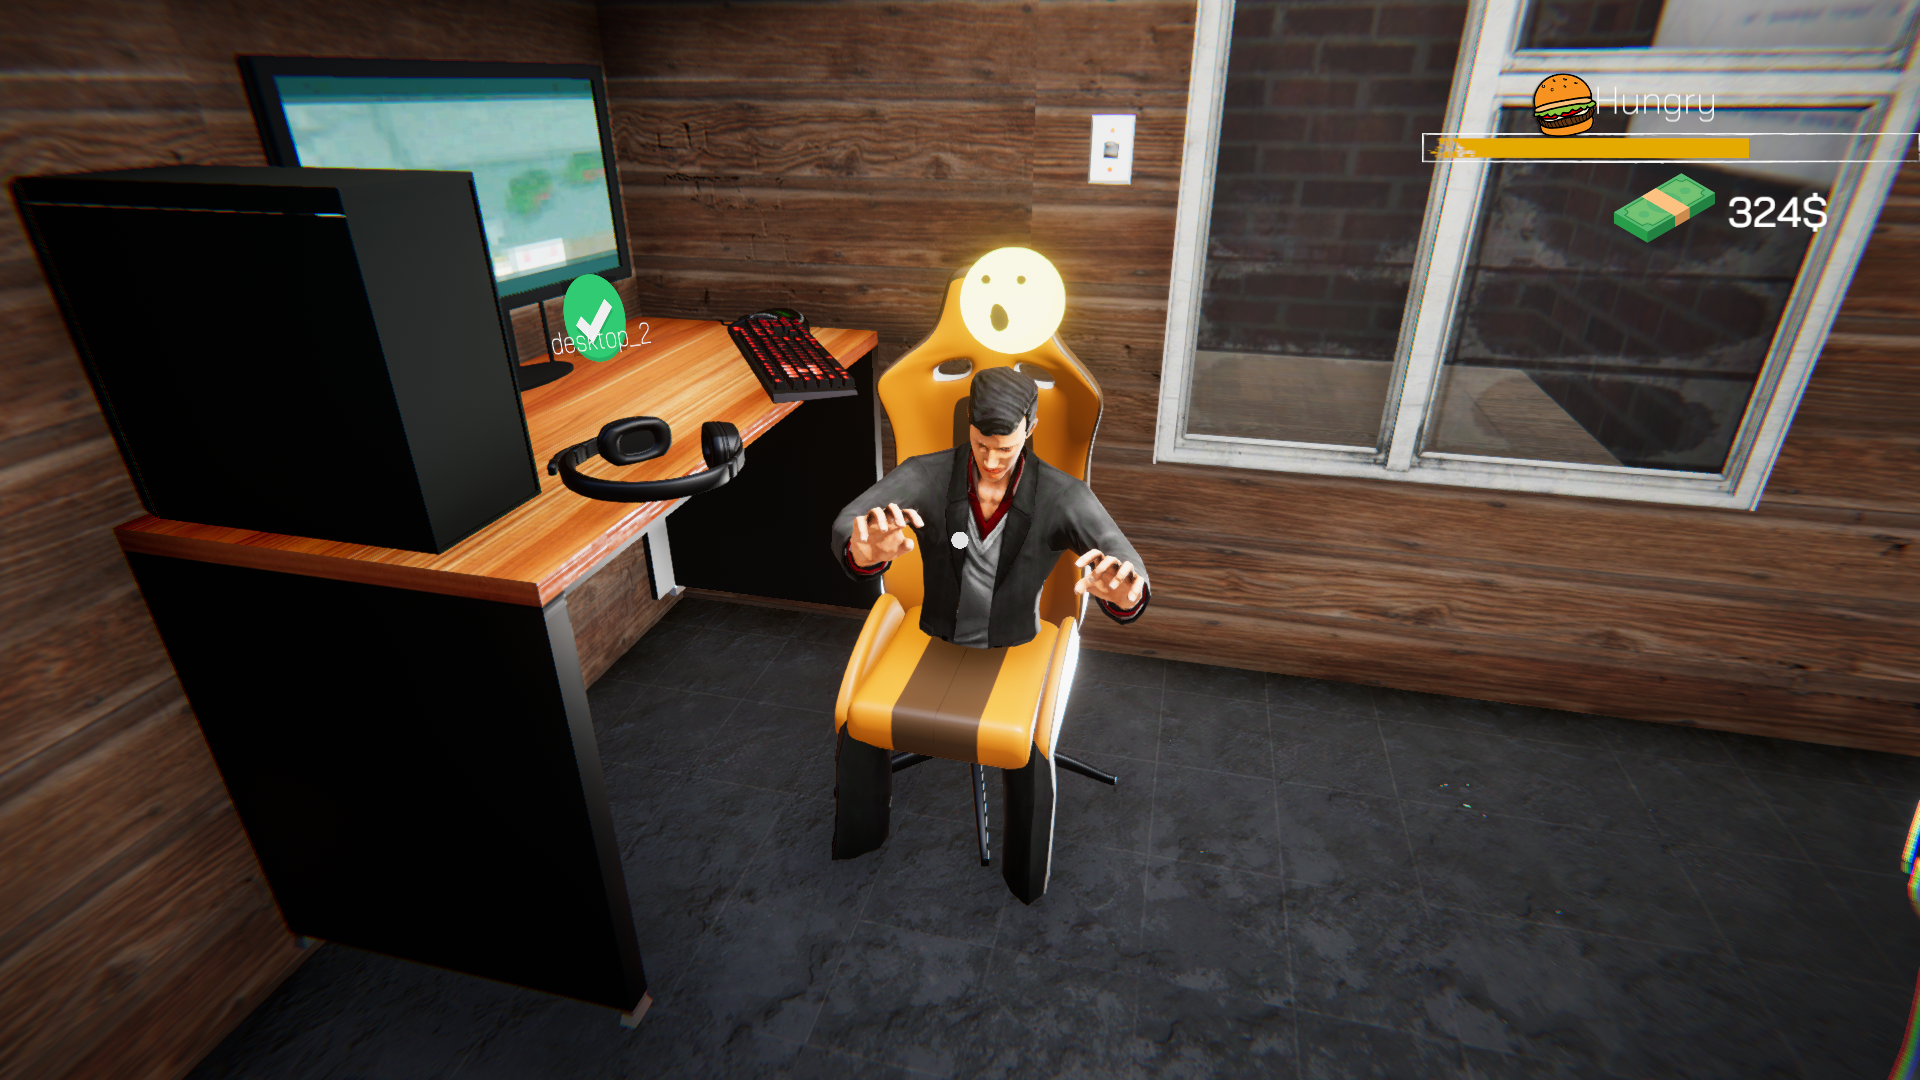 Internet cafe simulator 2 apk